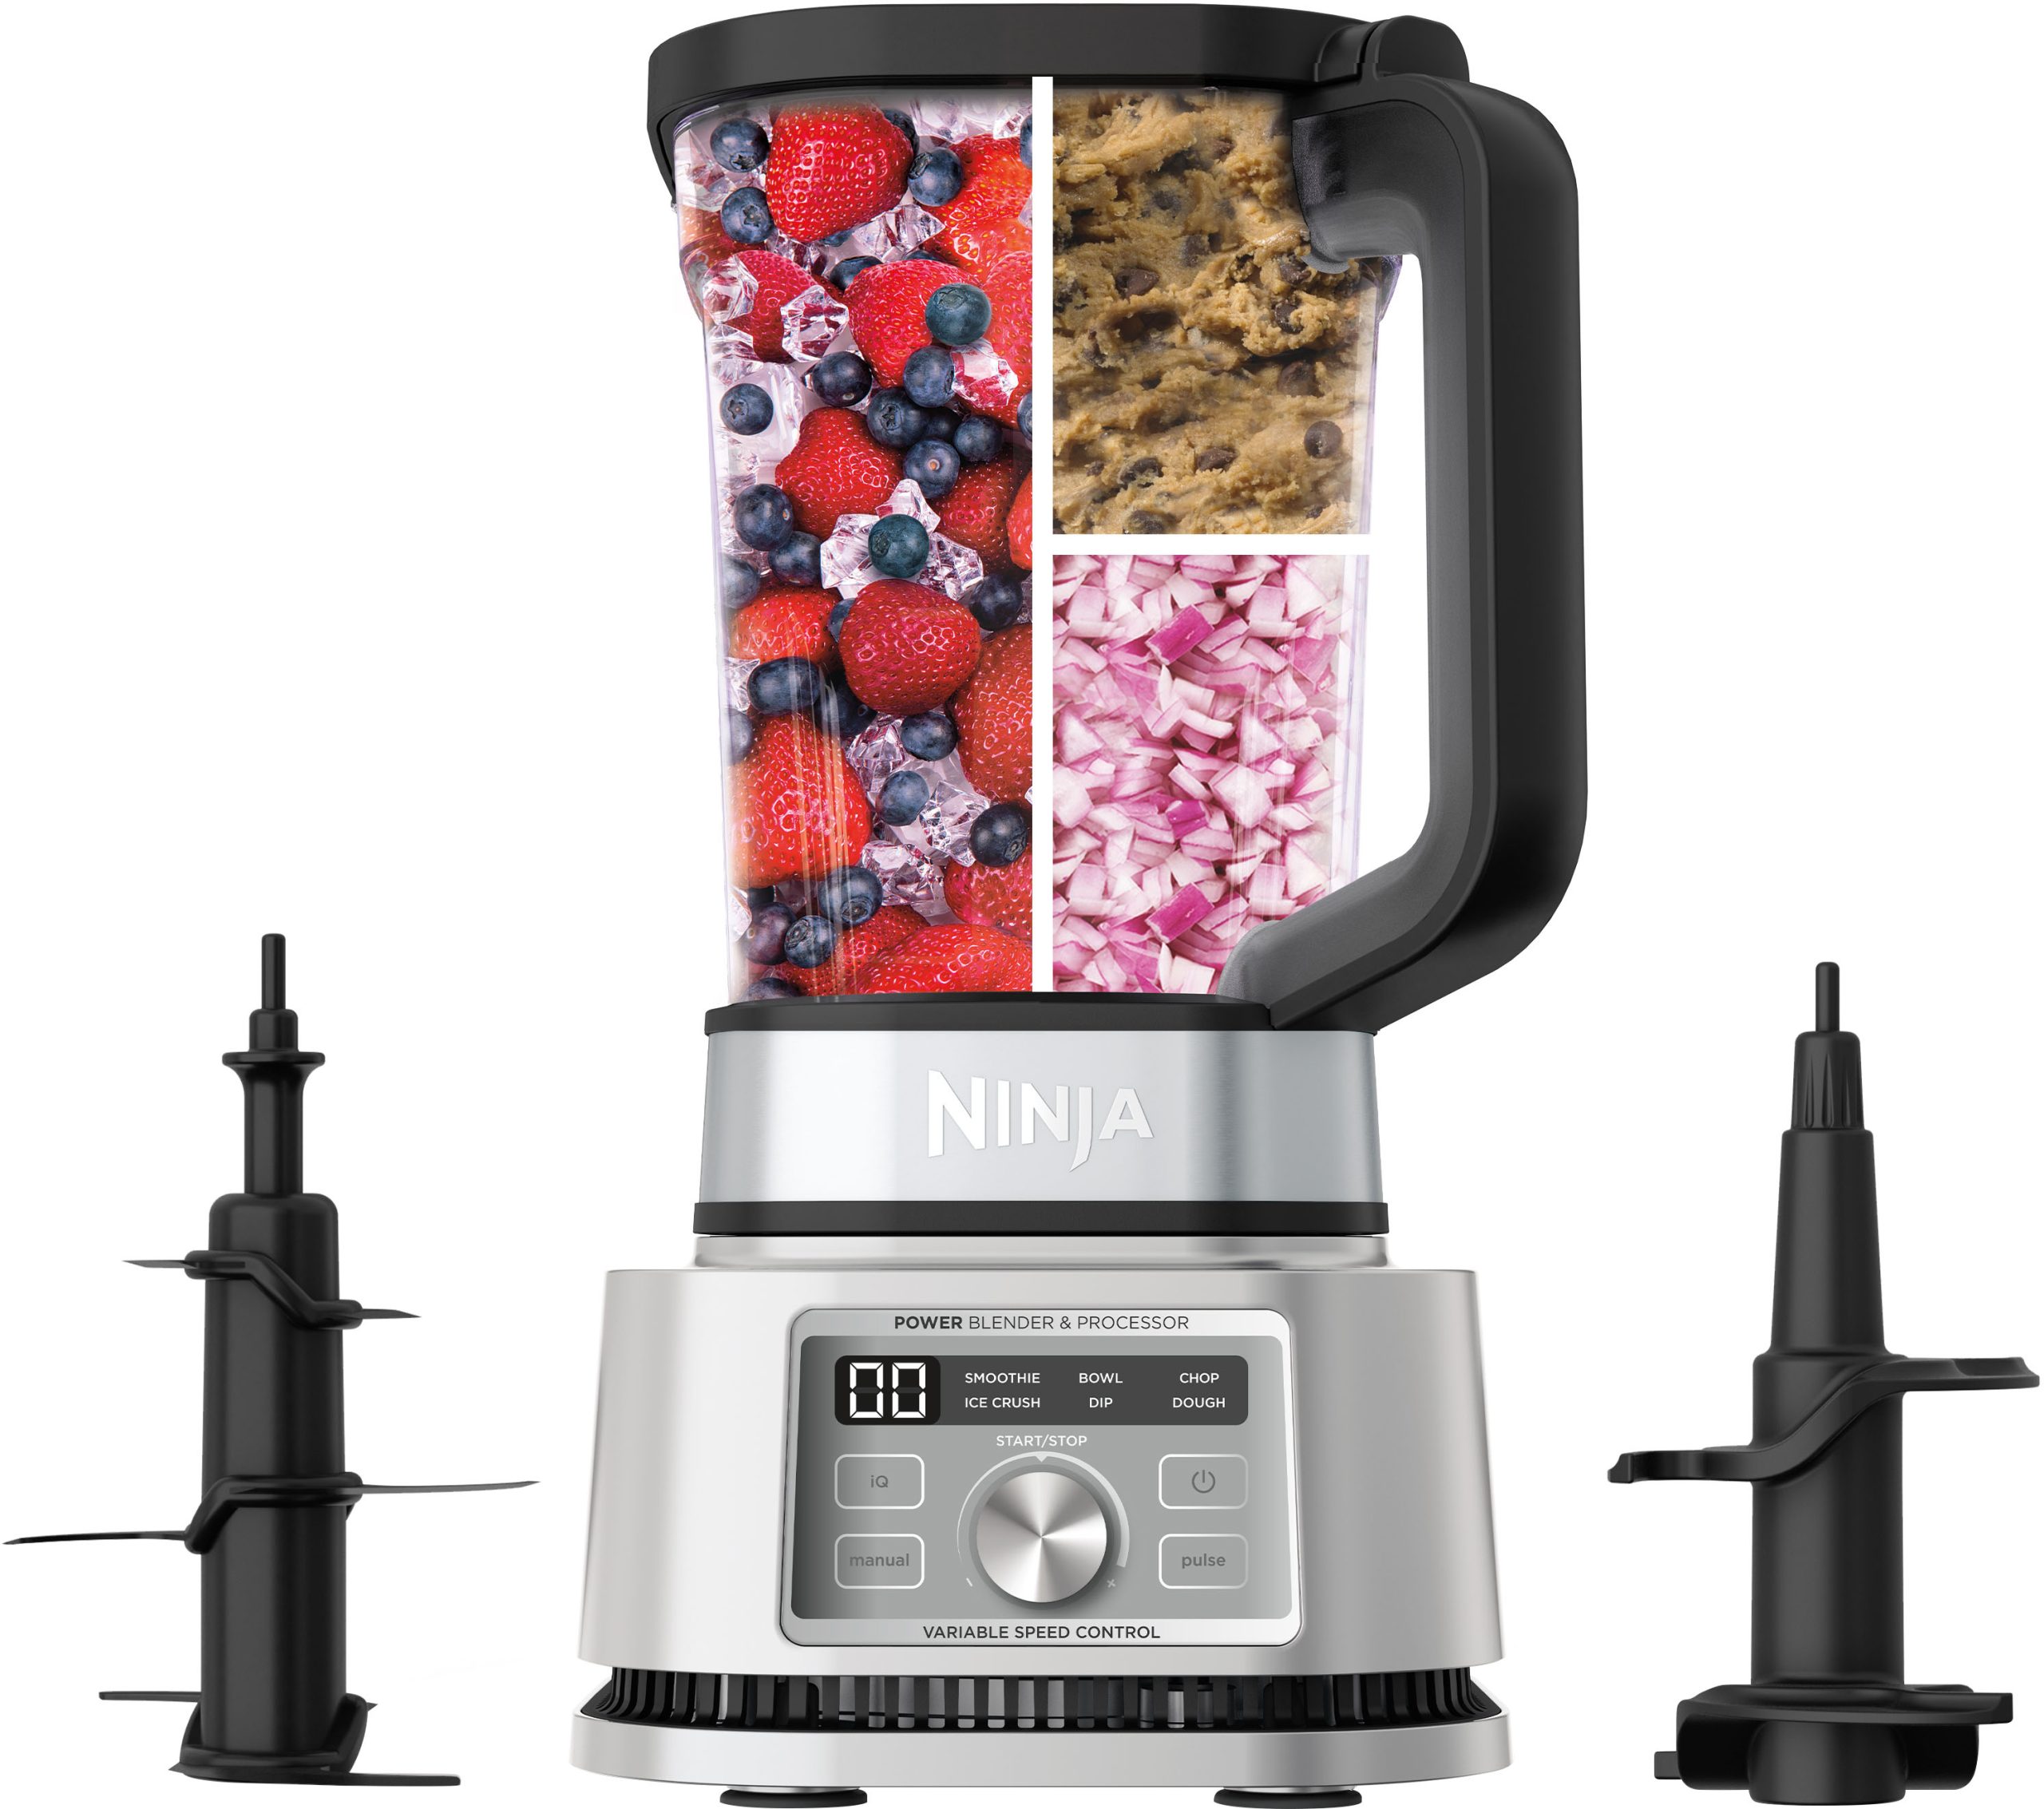 Ninja Foodi Blender